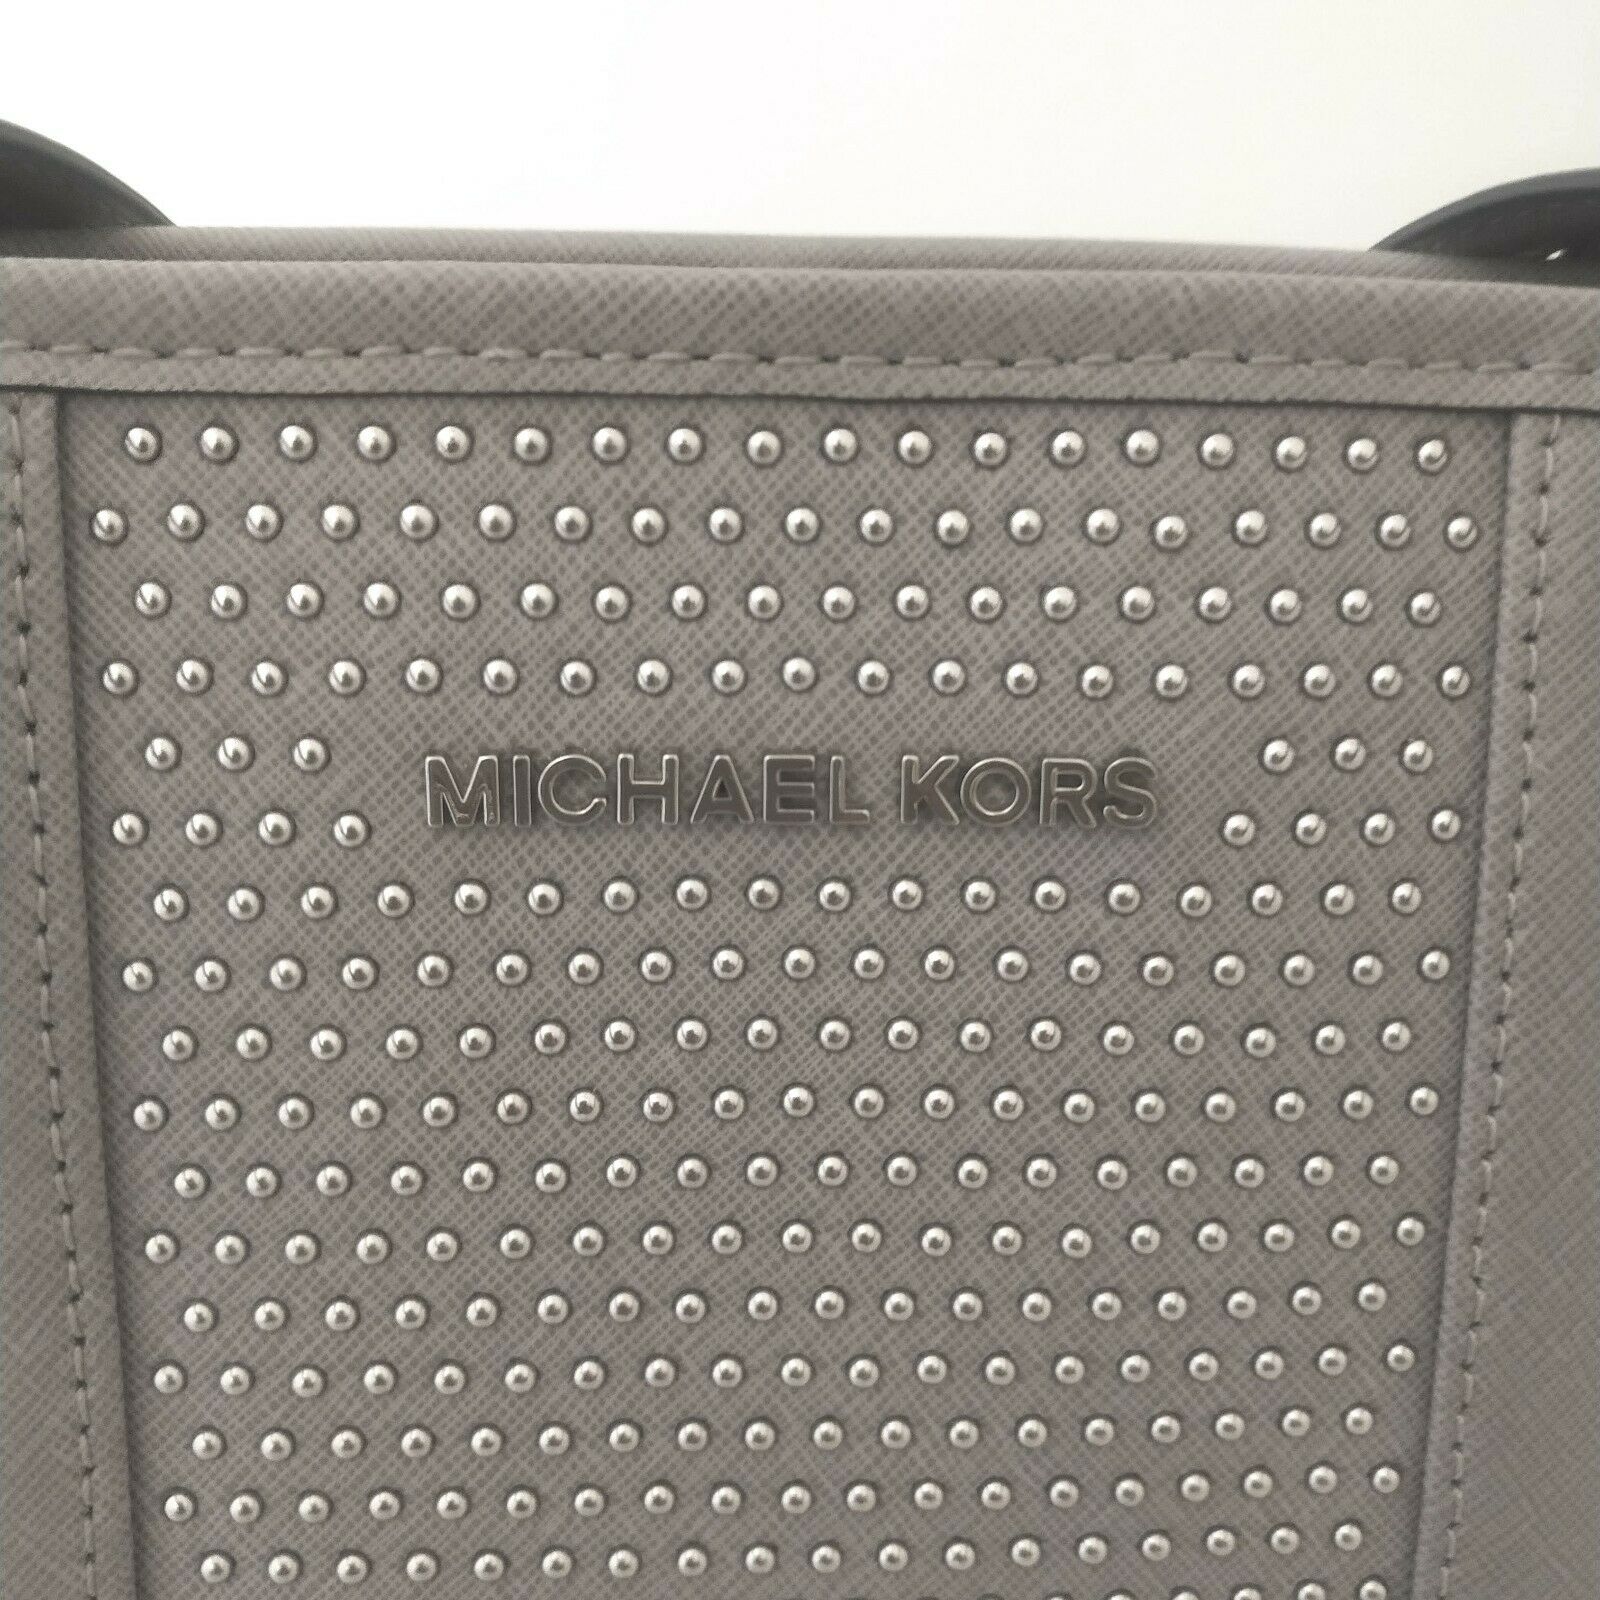 Michael Kors Jet Set Large Saffiano Leather Stud Tote in Black